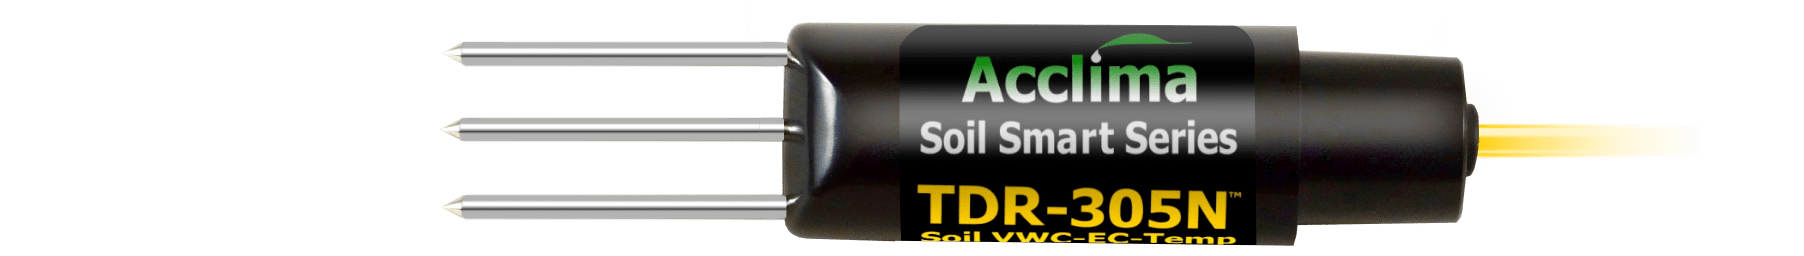 Acclima TDR-305N 高盐环境土壤温湿盐传感器